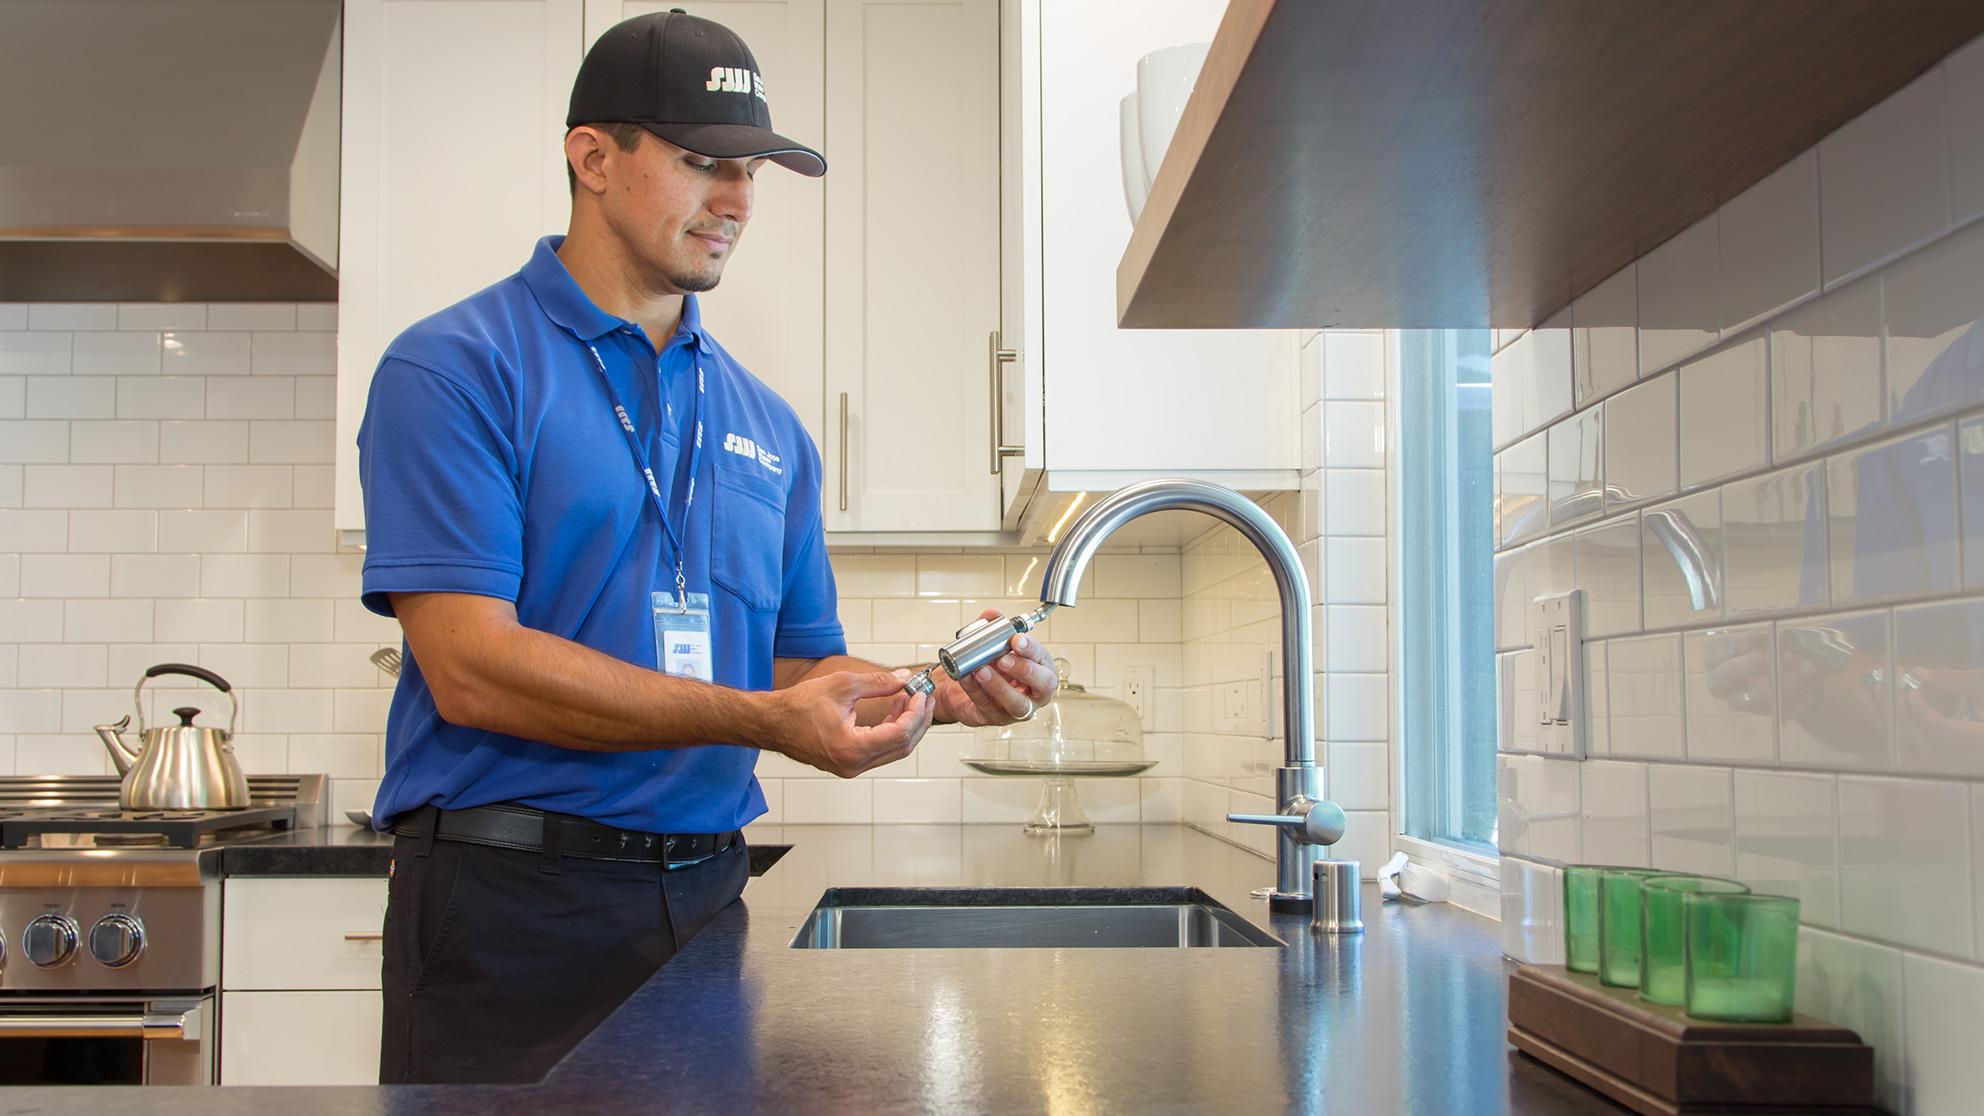 San Jose Water worker examines kitchen faucet